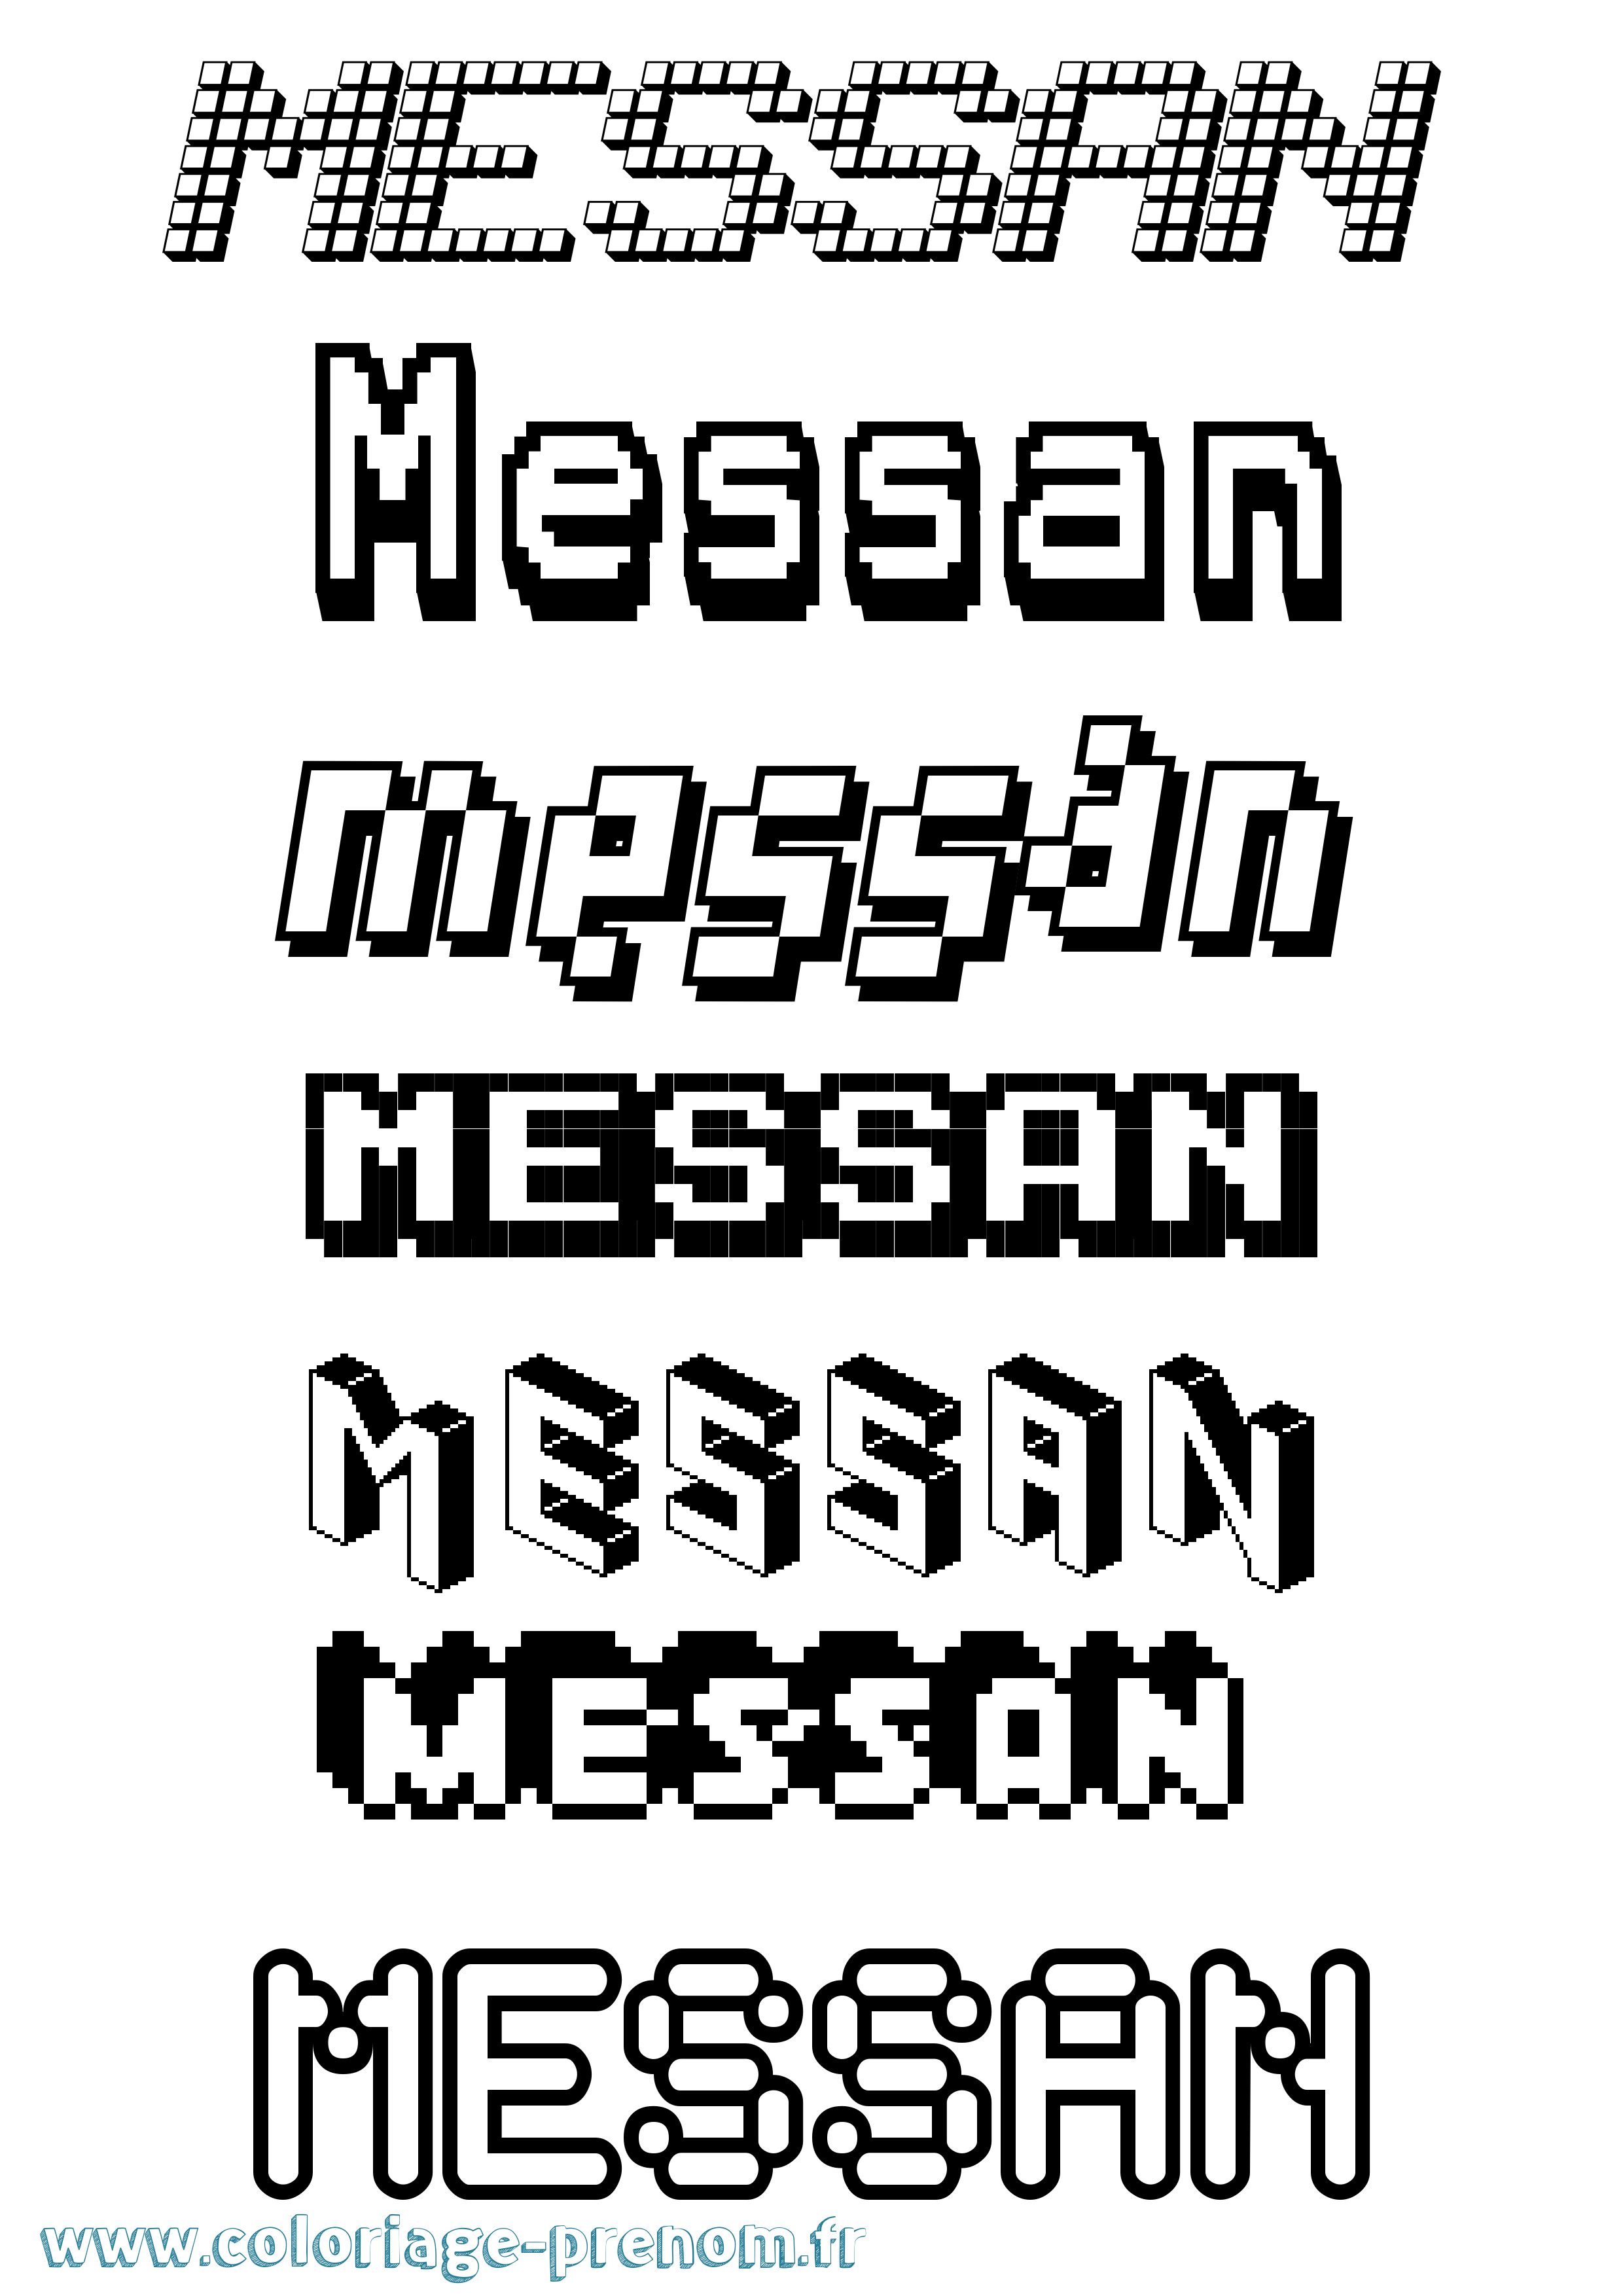 Coloriage prénom Messan Pixel